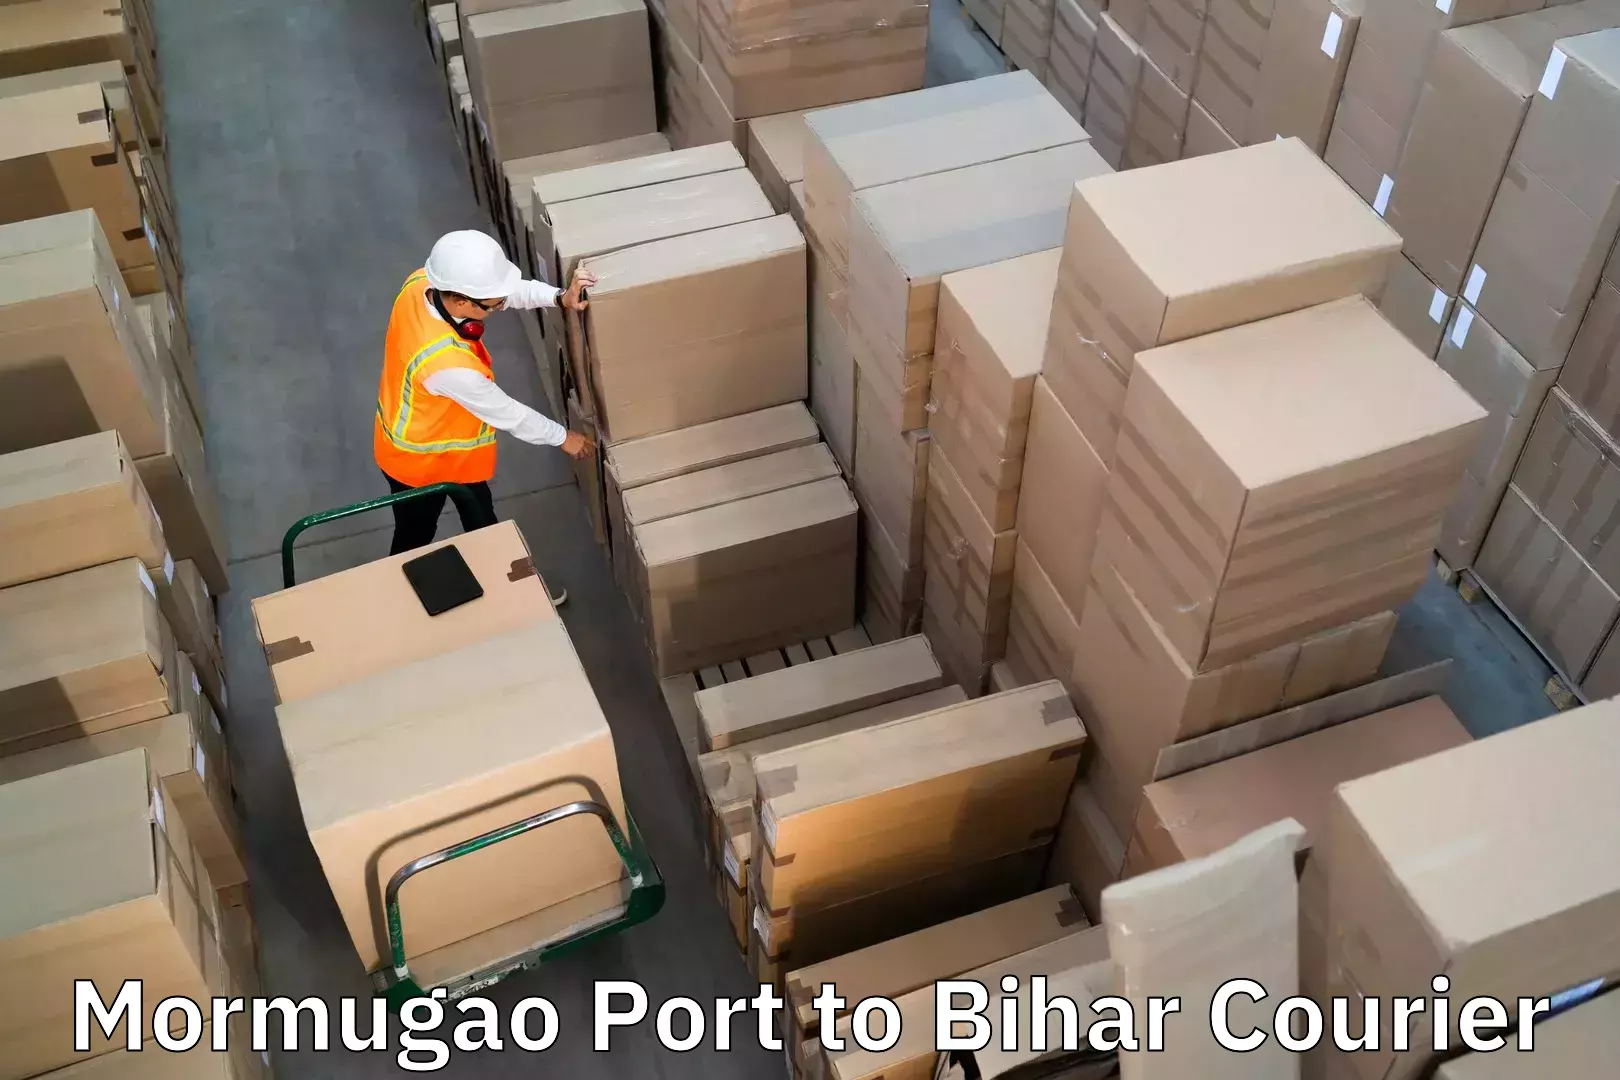 Baggage shipping experts Mormugao Port to Danapur